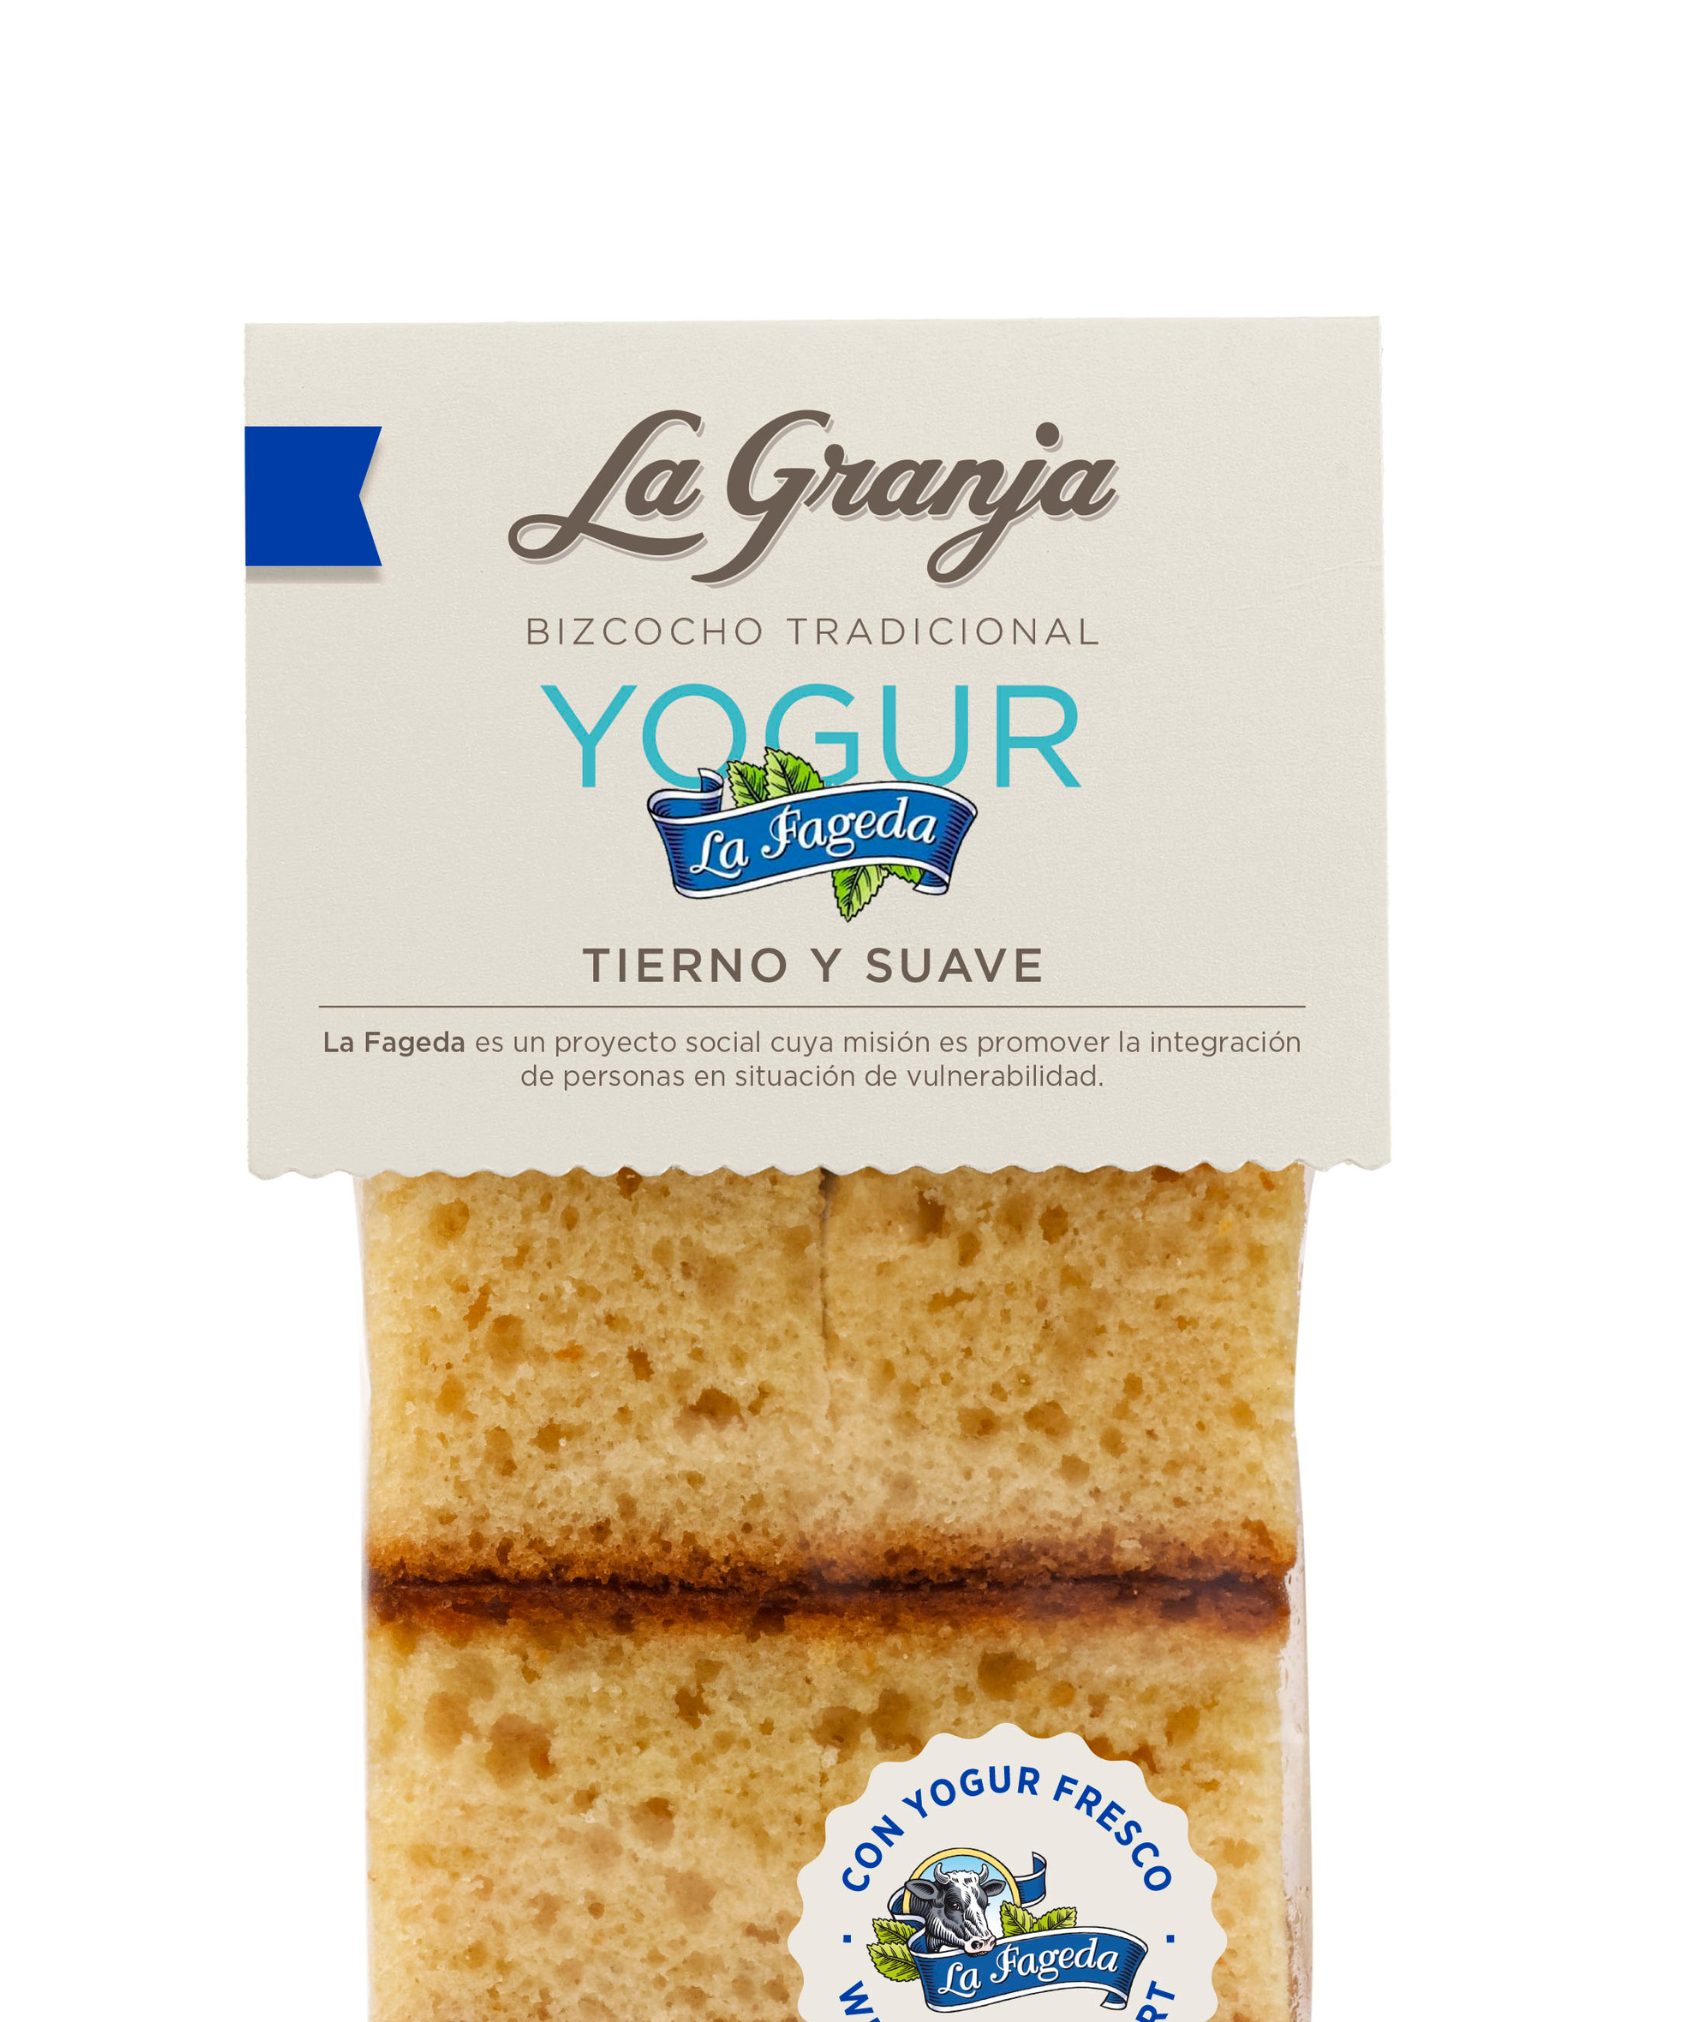 La Fageda traditional yogurt sponge cake